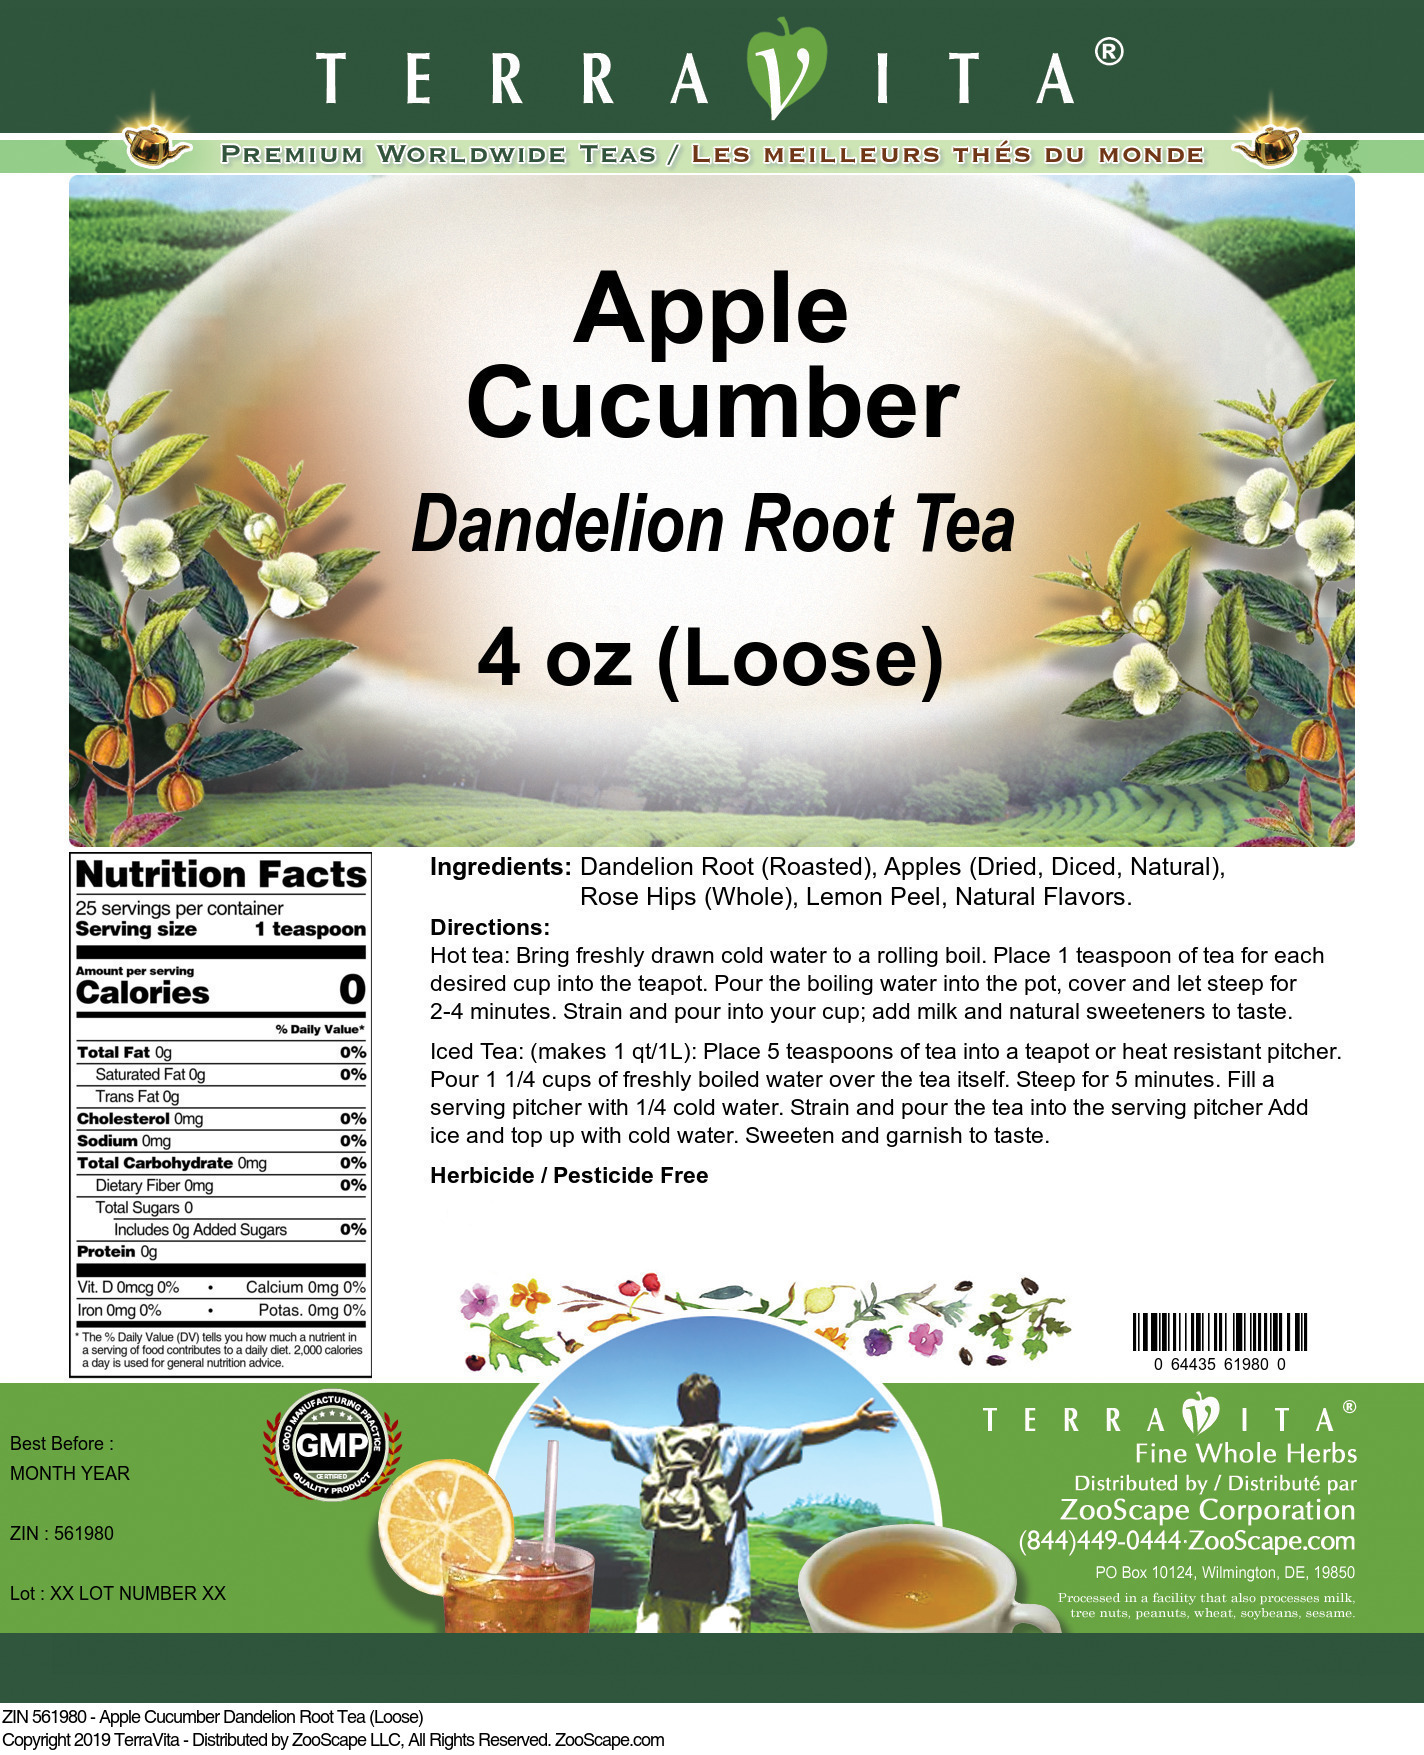 Apple Cucumber Dandelion Root Tea (Loose) - Label